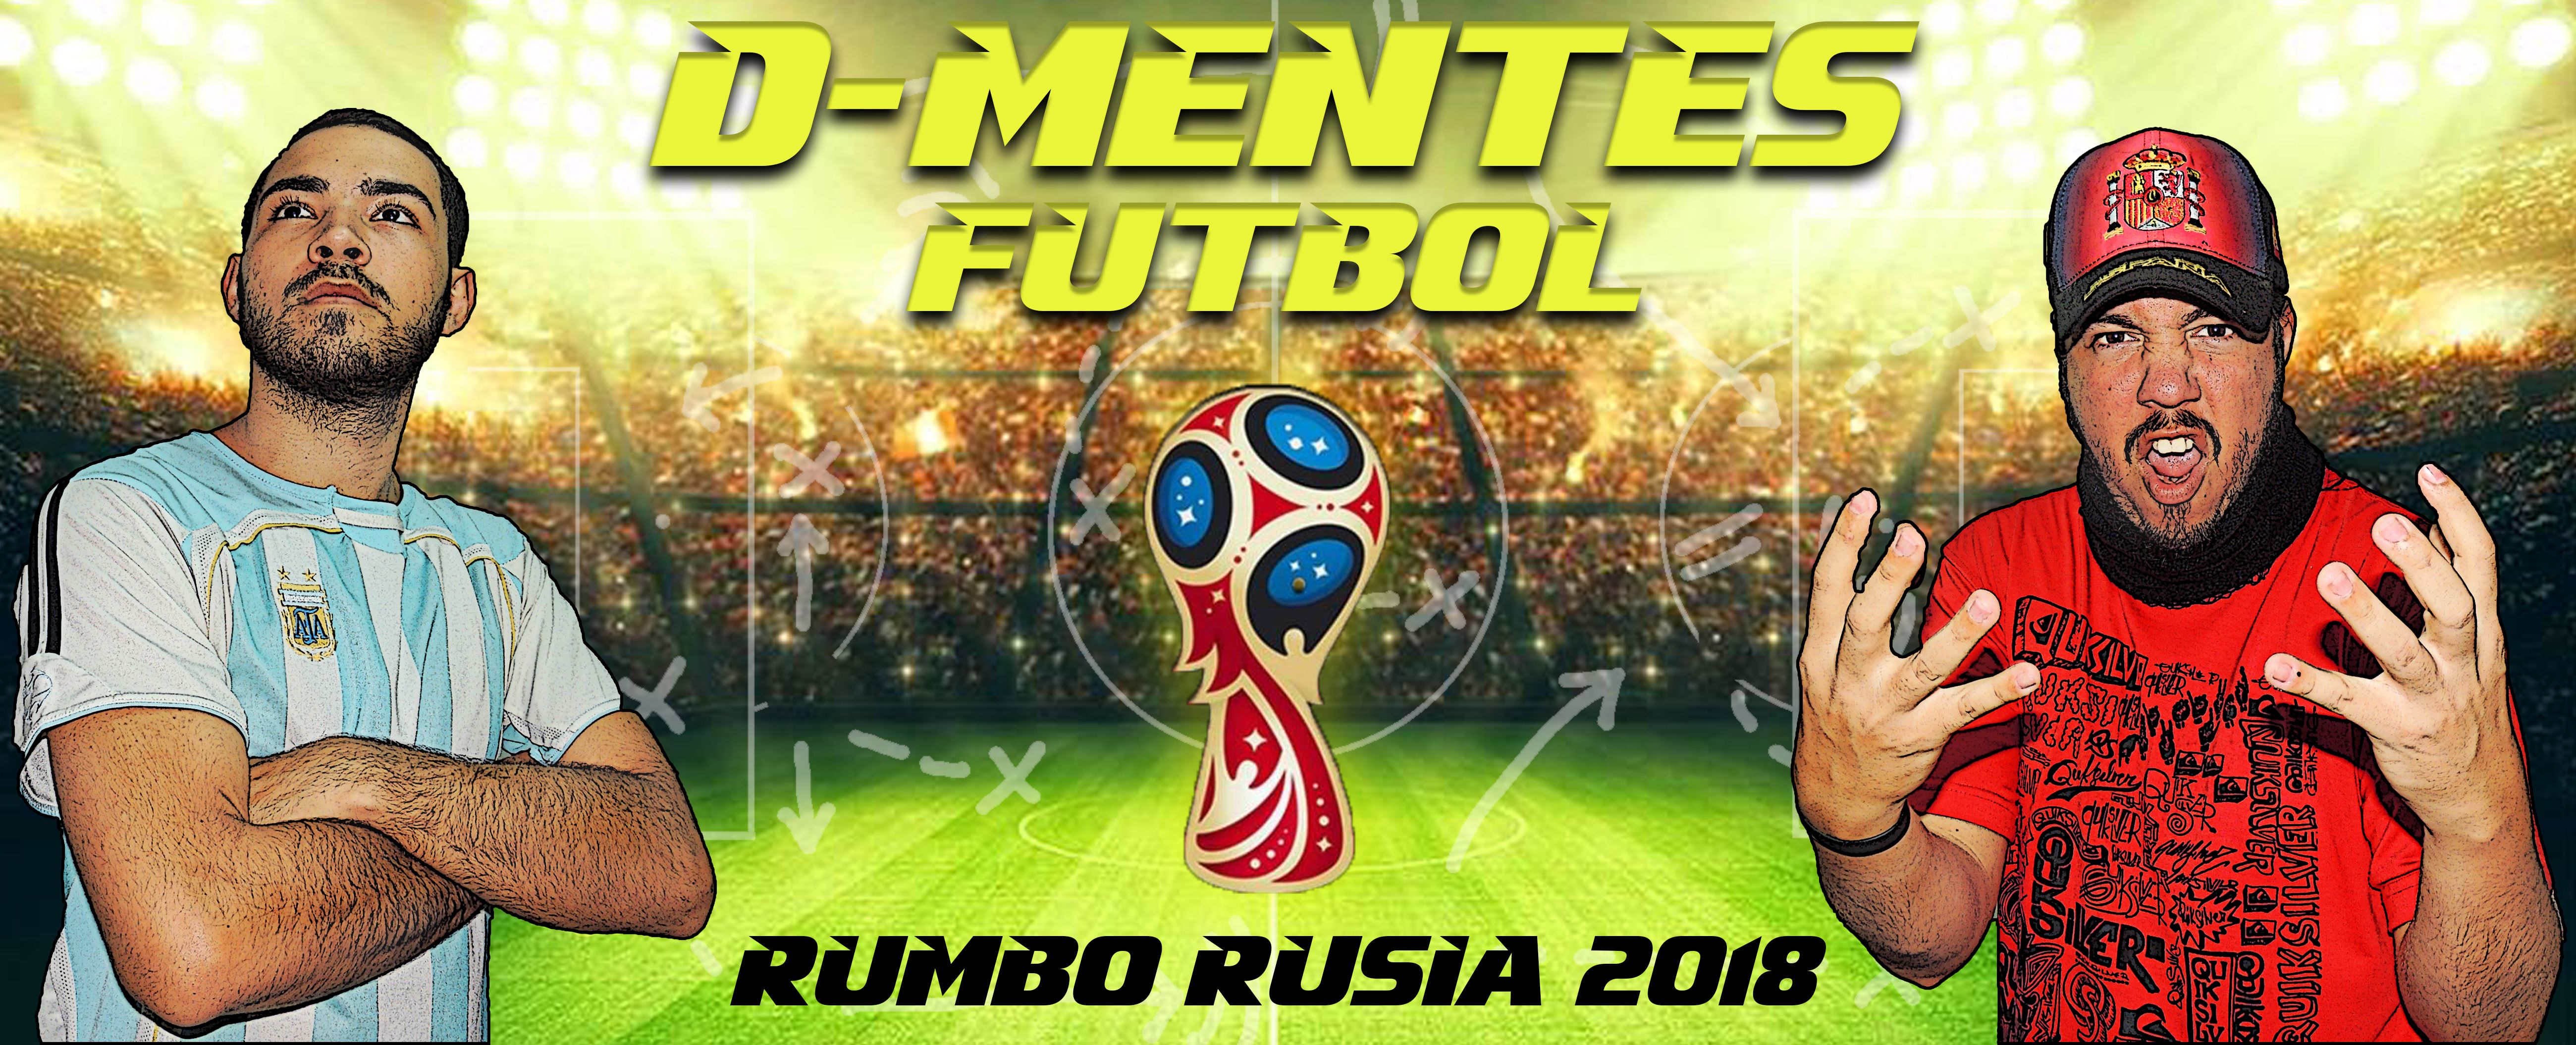 D-Mentes Futbol Logo 1.jpg